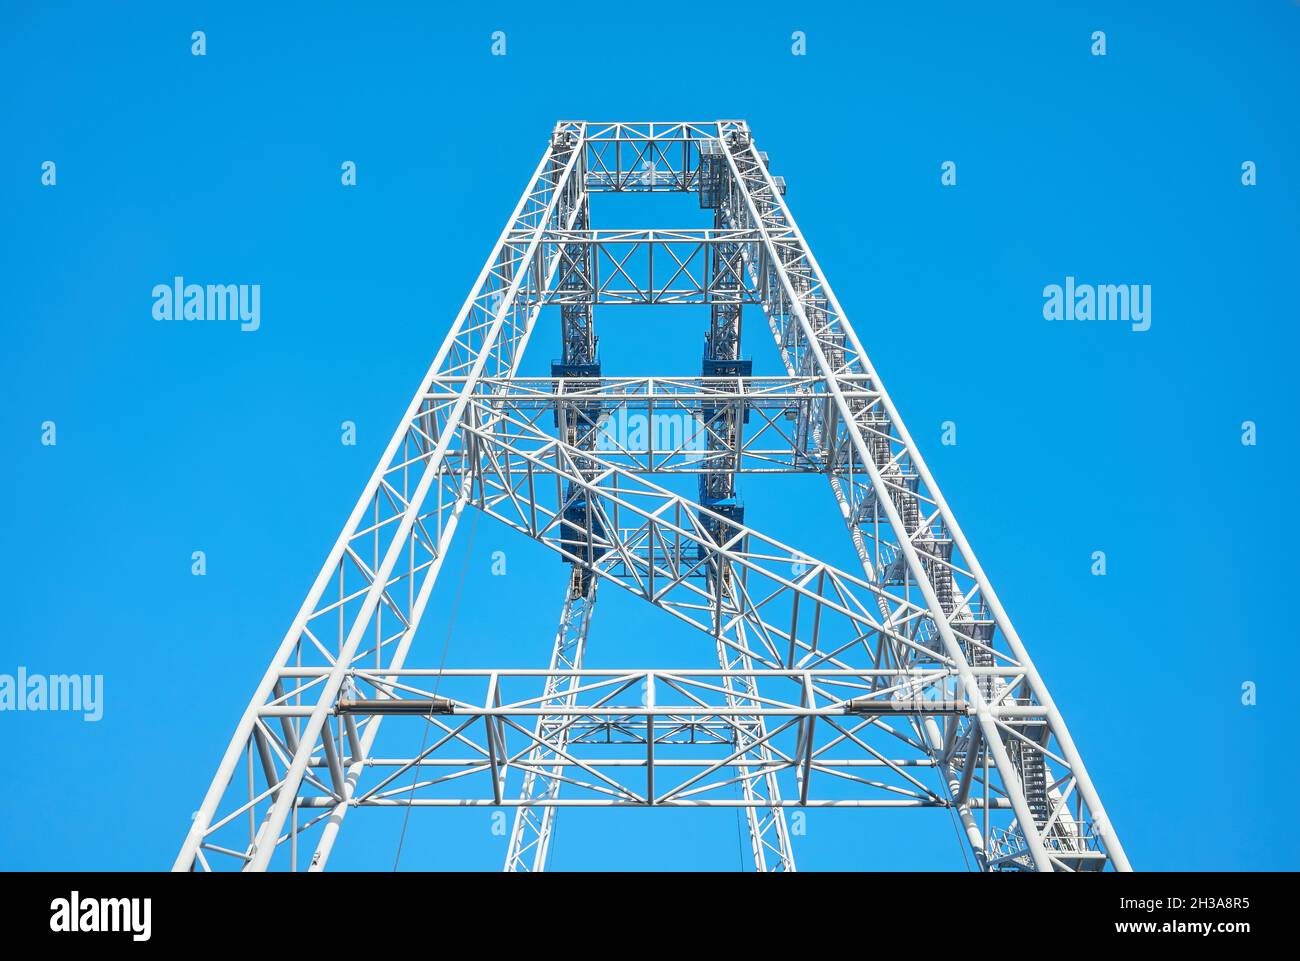 Nahaufnahme eines Portalkran-Turms am blauen Himmel. Stockfoto